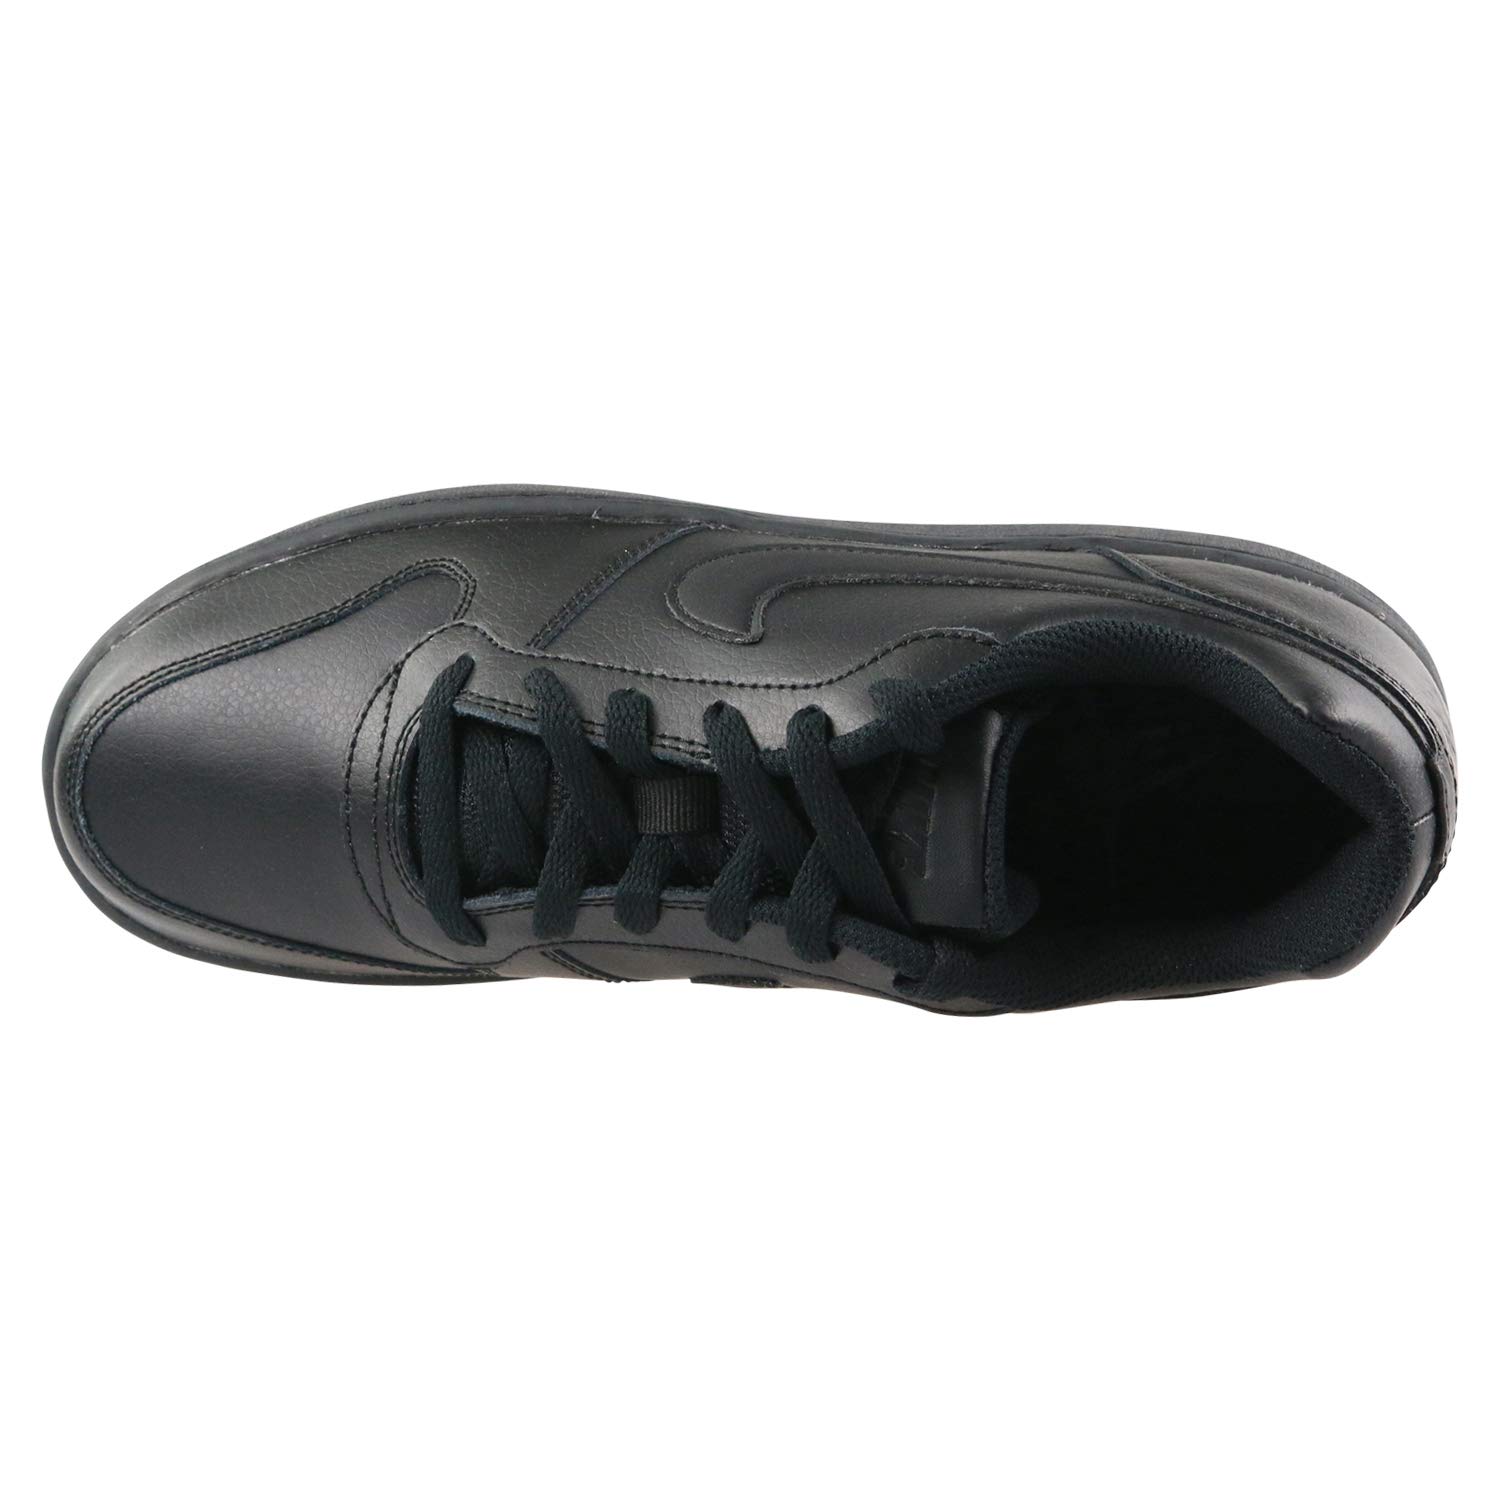 Nike Men's Ebernon Low Basketball Shoe